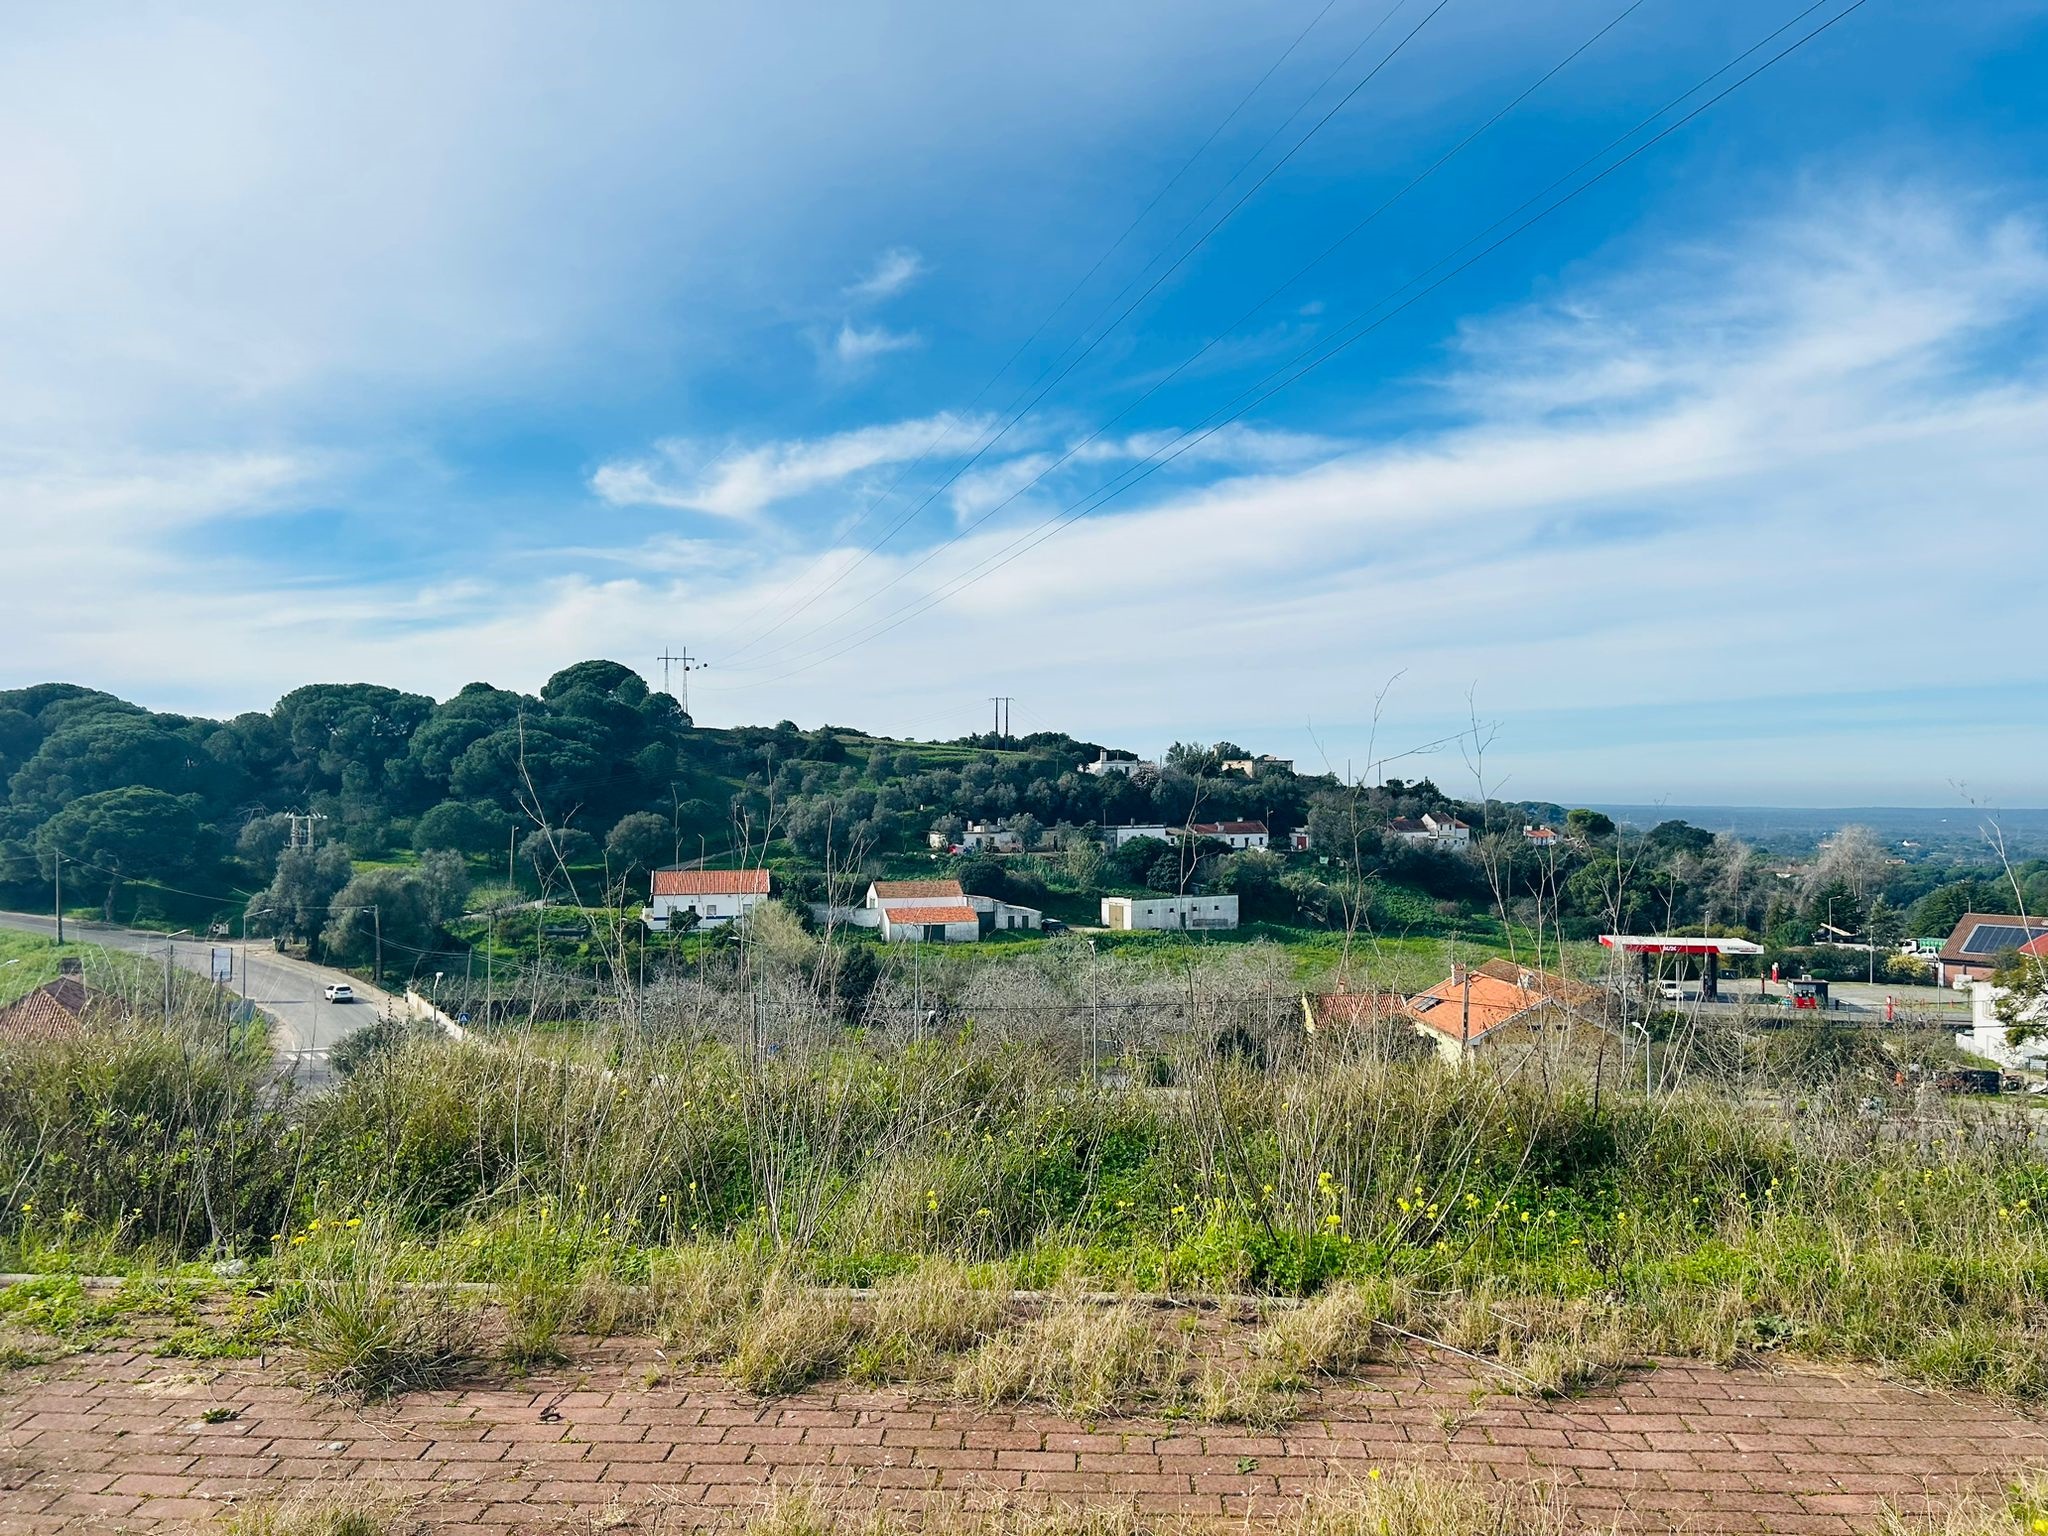 For Sale Land Plot For Villa Construction Santiago Do Cacém Alentejo Portugal Ter4818mc001